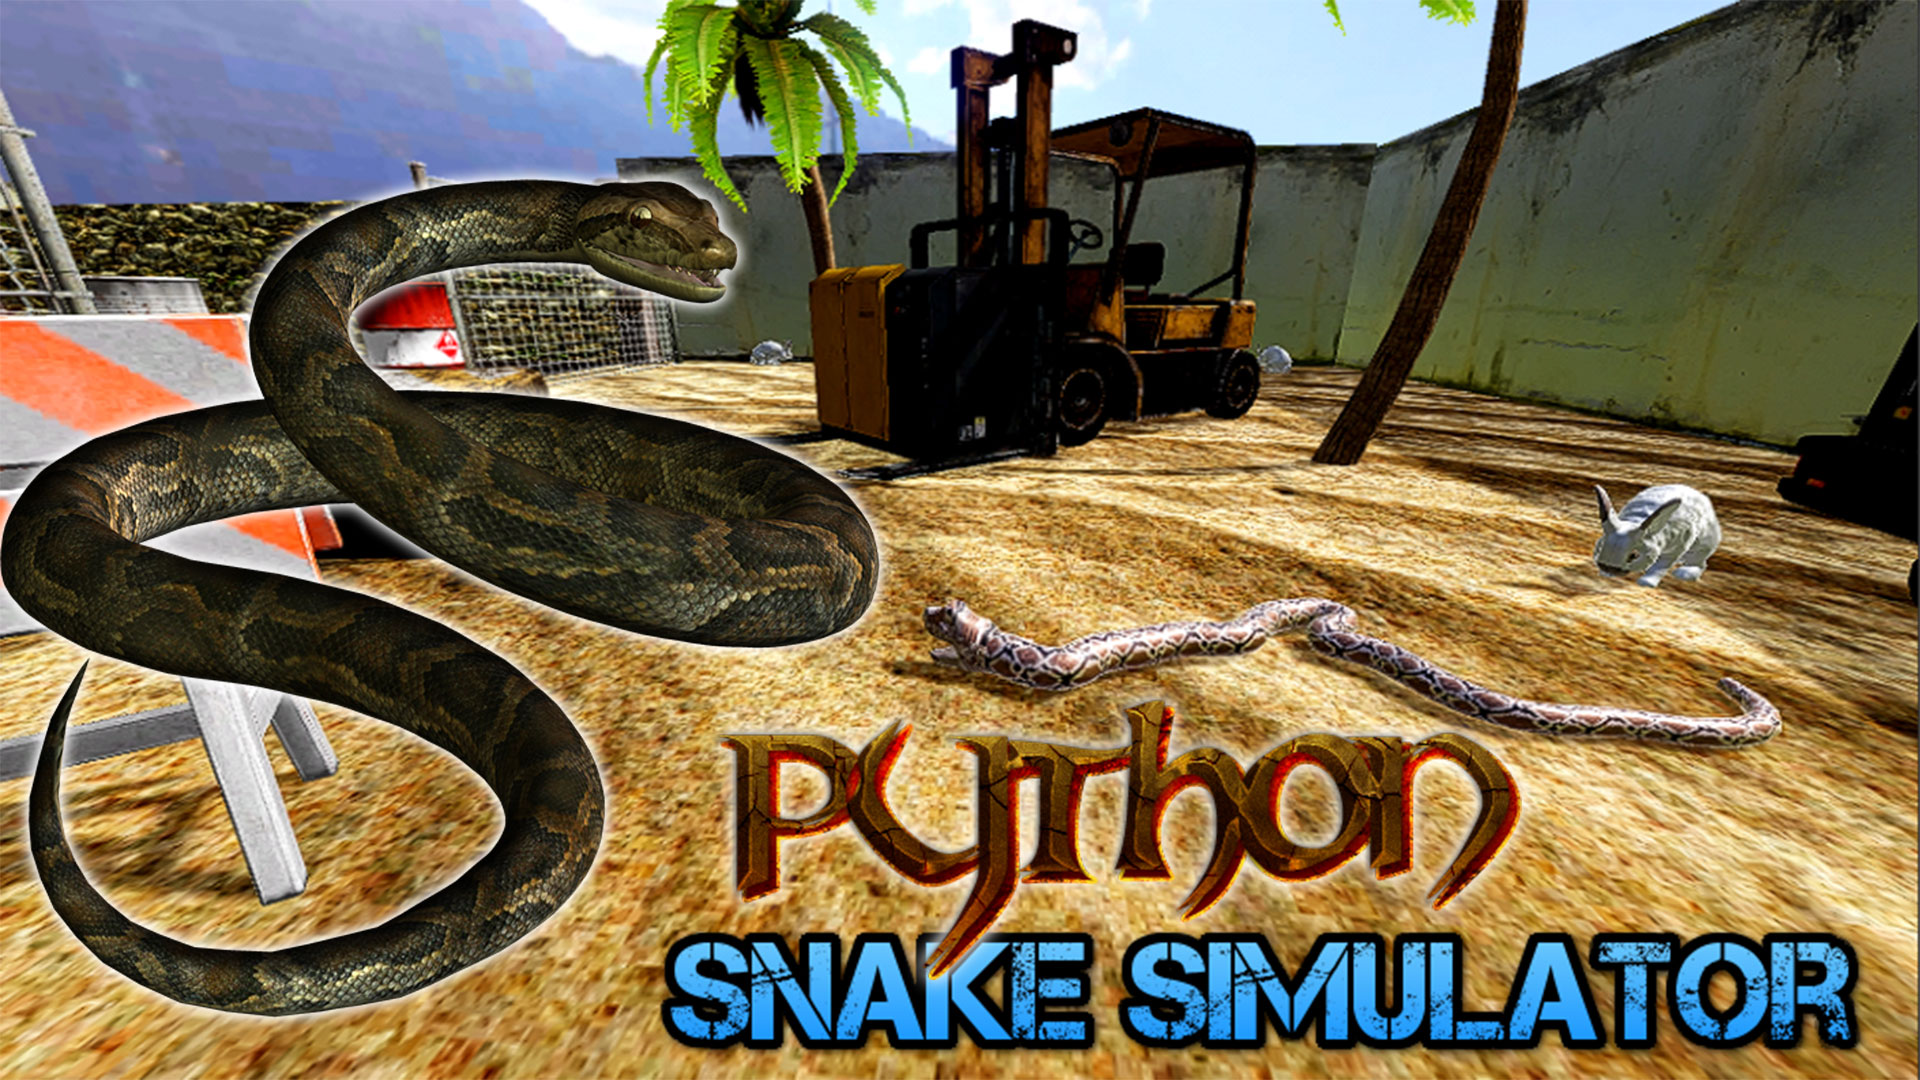 Python Snake Simulator Game Image